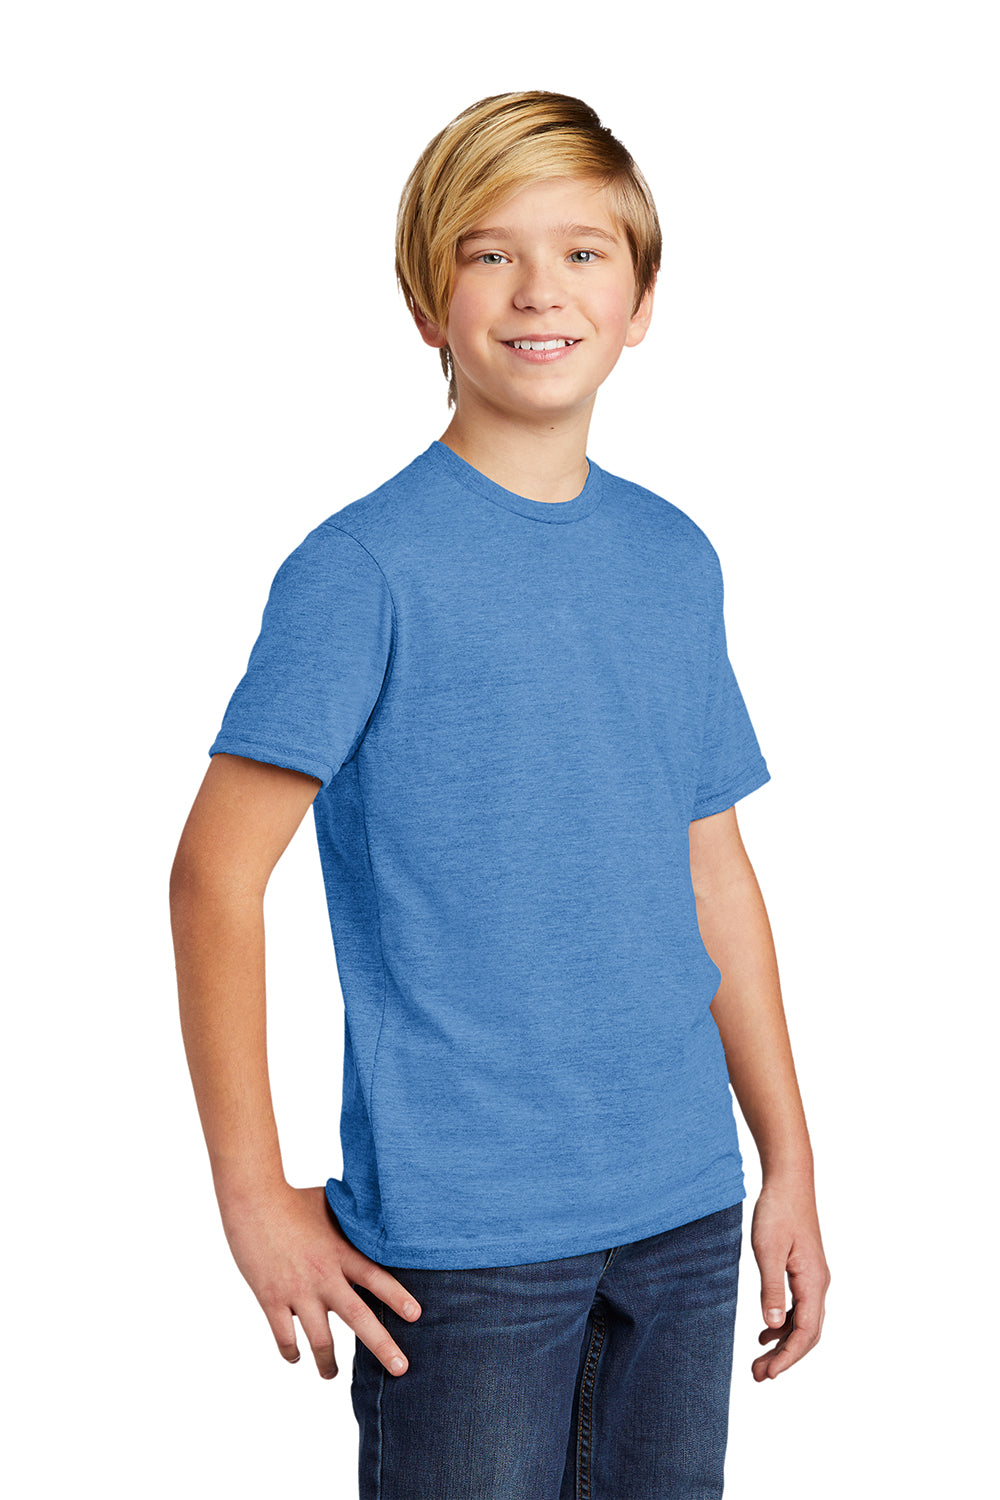 Allmade AL207 Youth Short Sleeve Crewneck T-Shirt Azure Blue Model 3Q